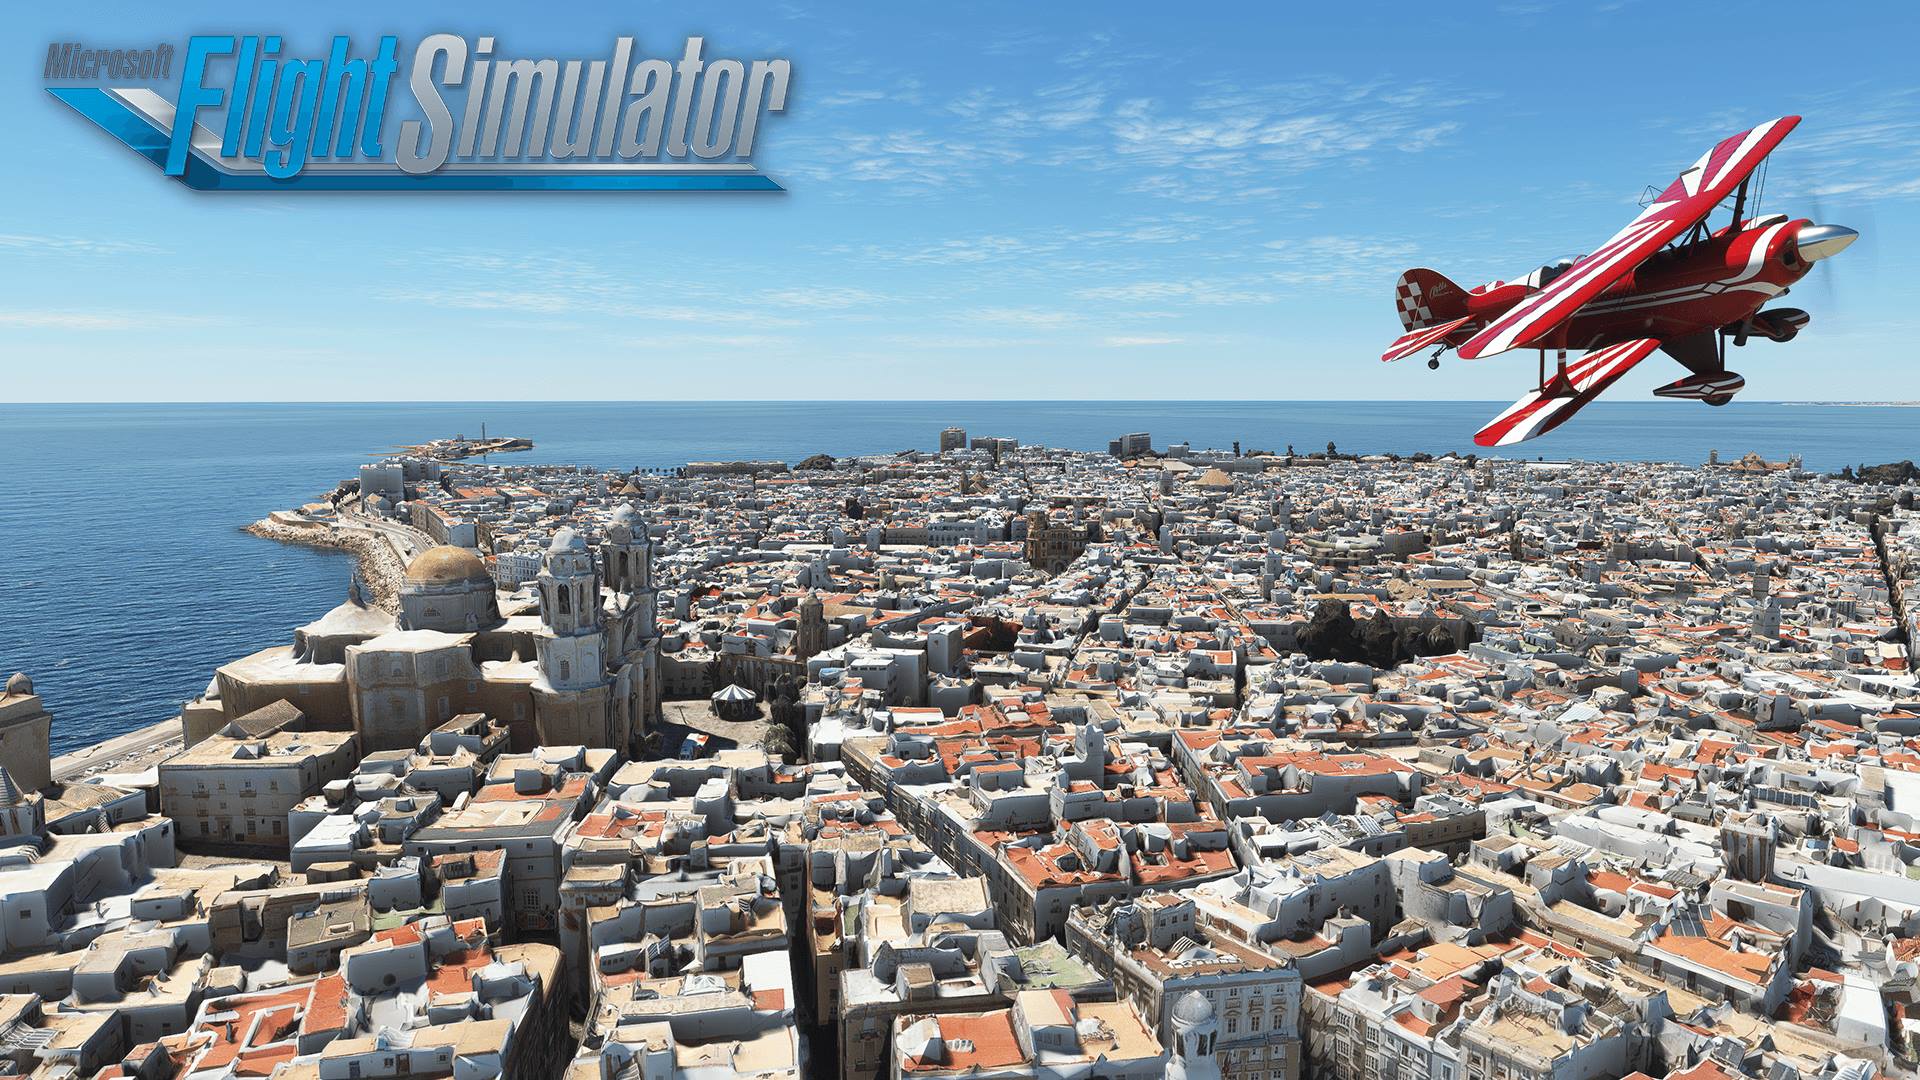 portada de Microsoft Flight Simulator